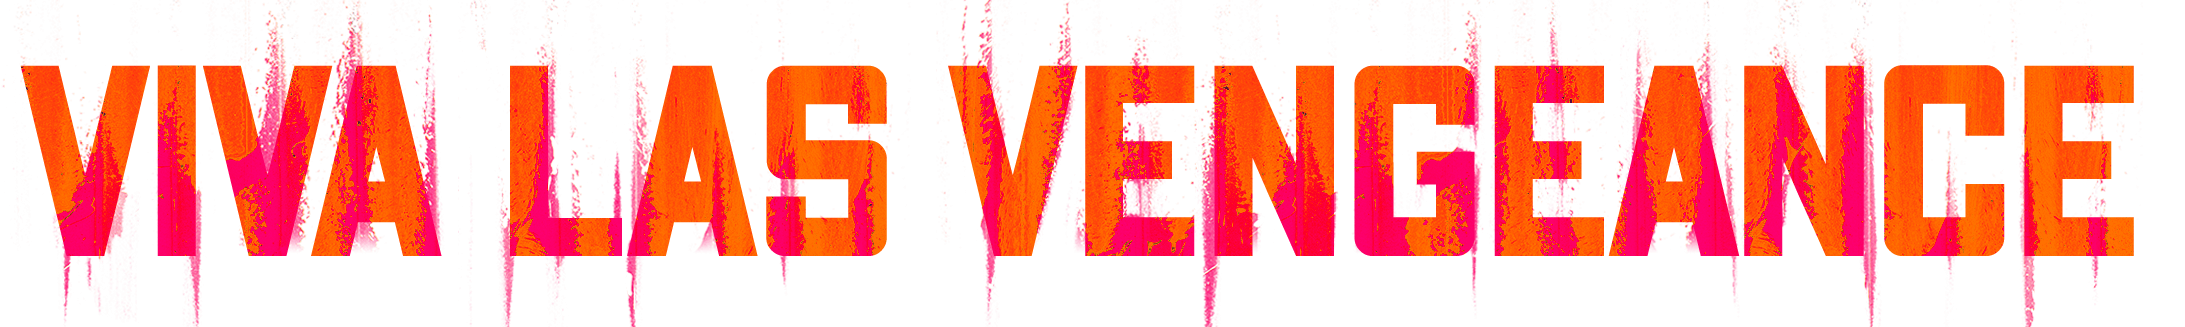 Army of the Dead - Viva Las Vengeance: A VR Experience - Las Vegas Logo